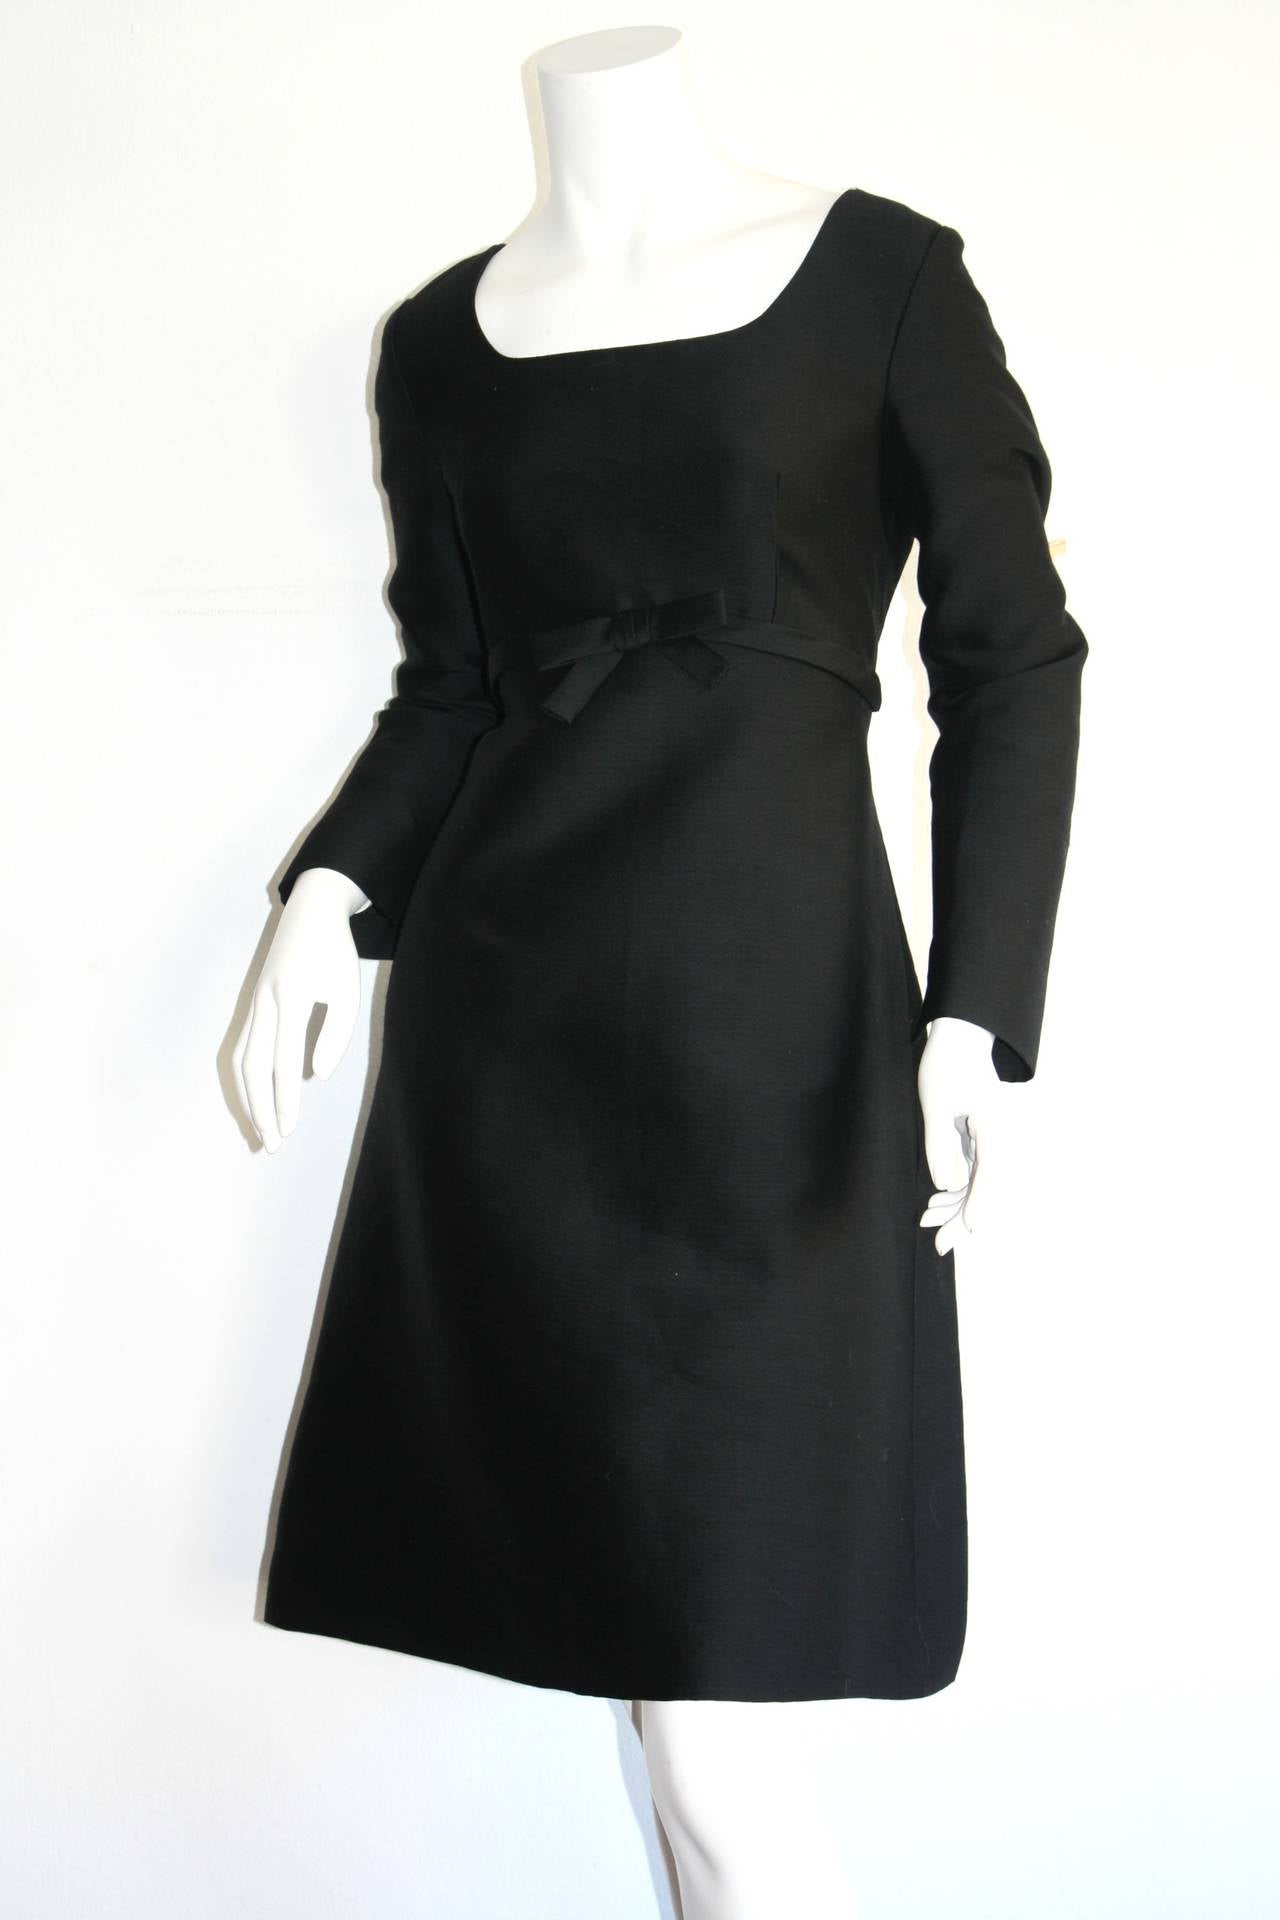 Suzy Perette 1960s Vintage Raw Silk Black Empire Bell Dress 1